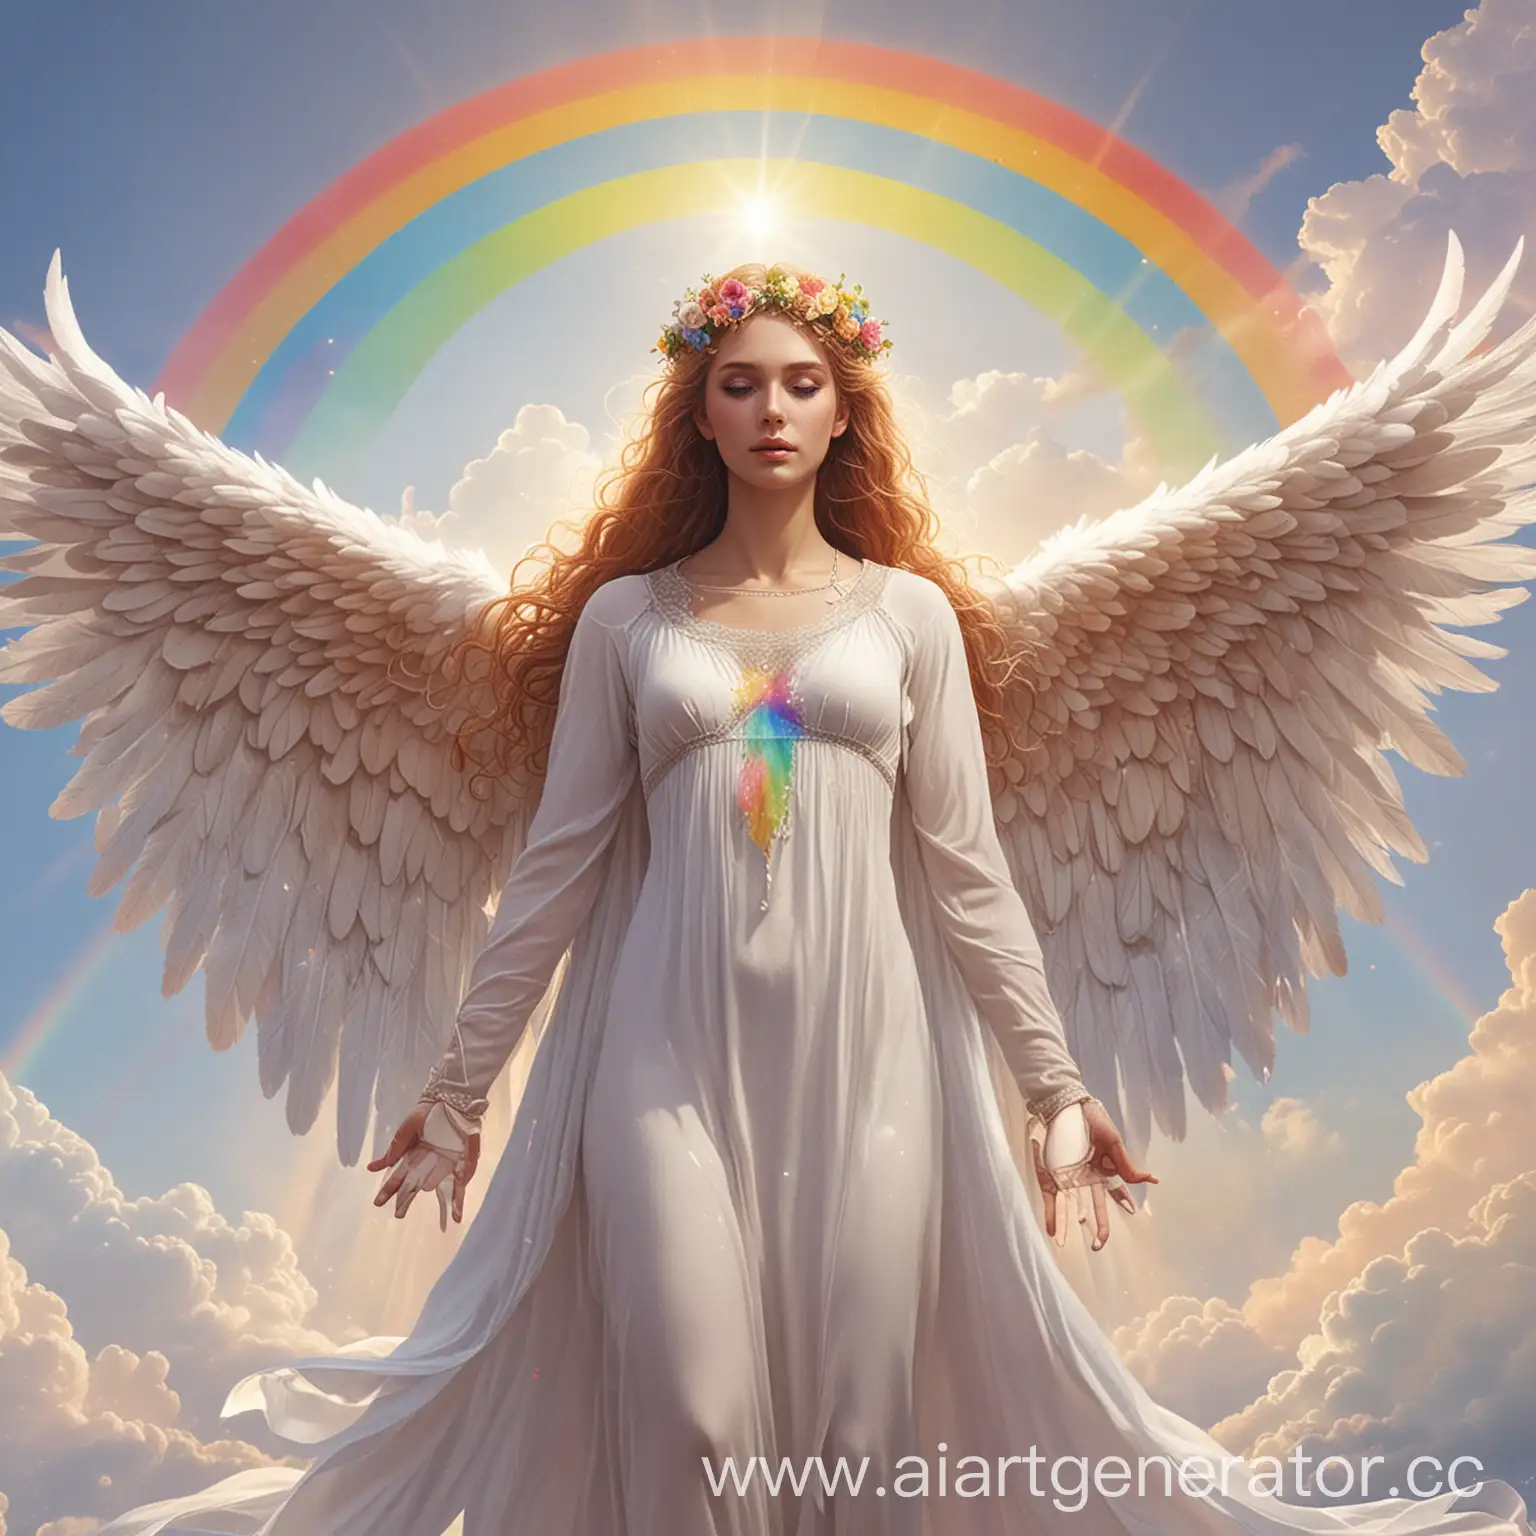 Celestial-LGBT-Rainbow-Angelic-Beings